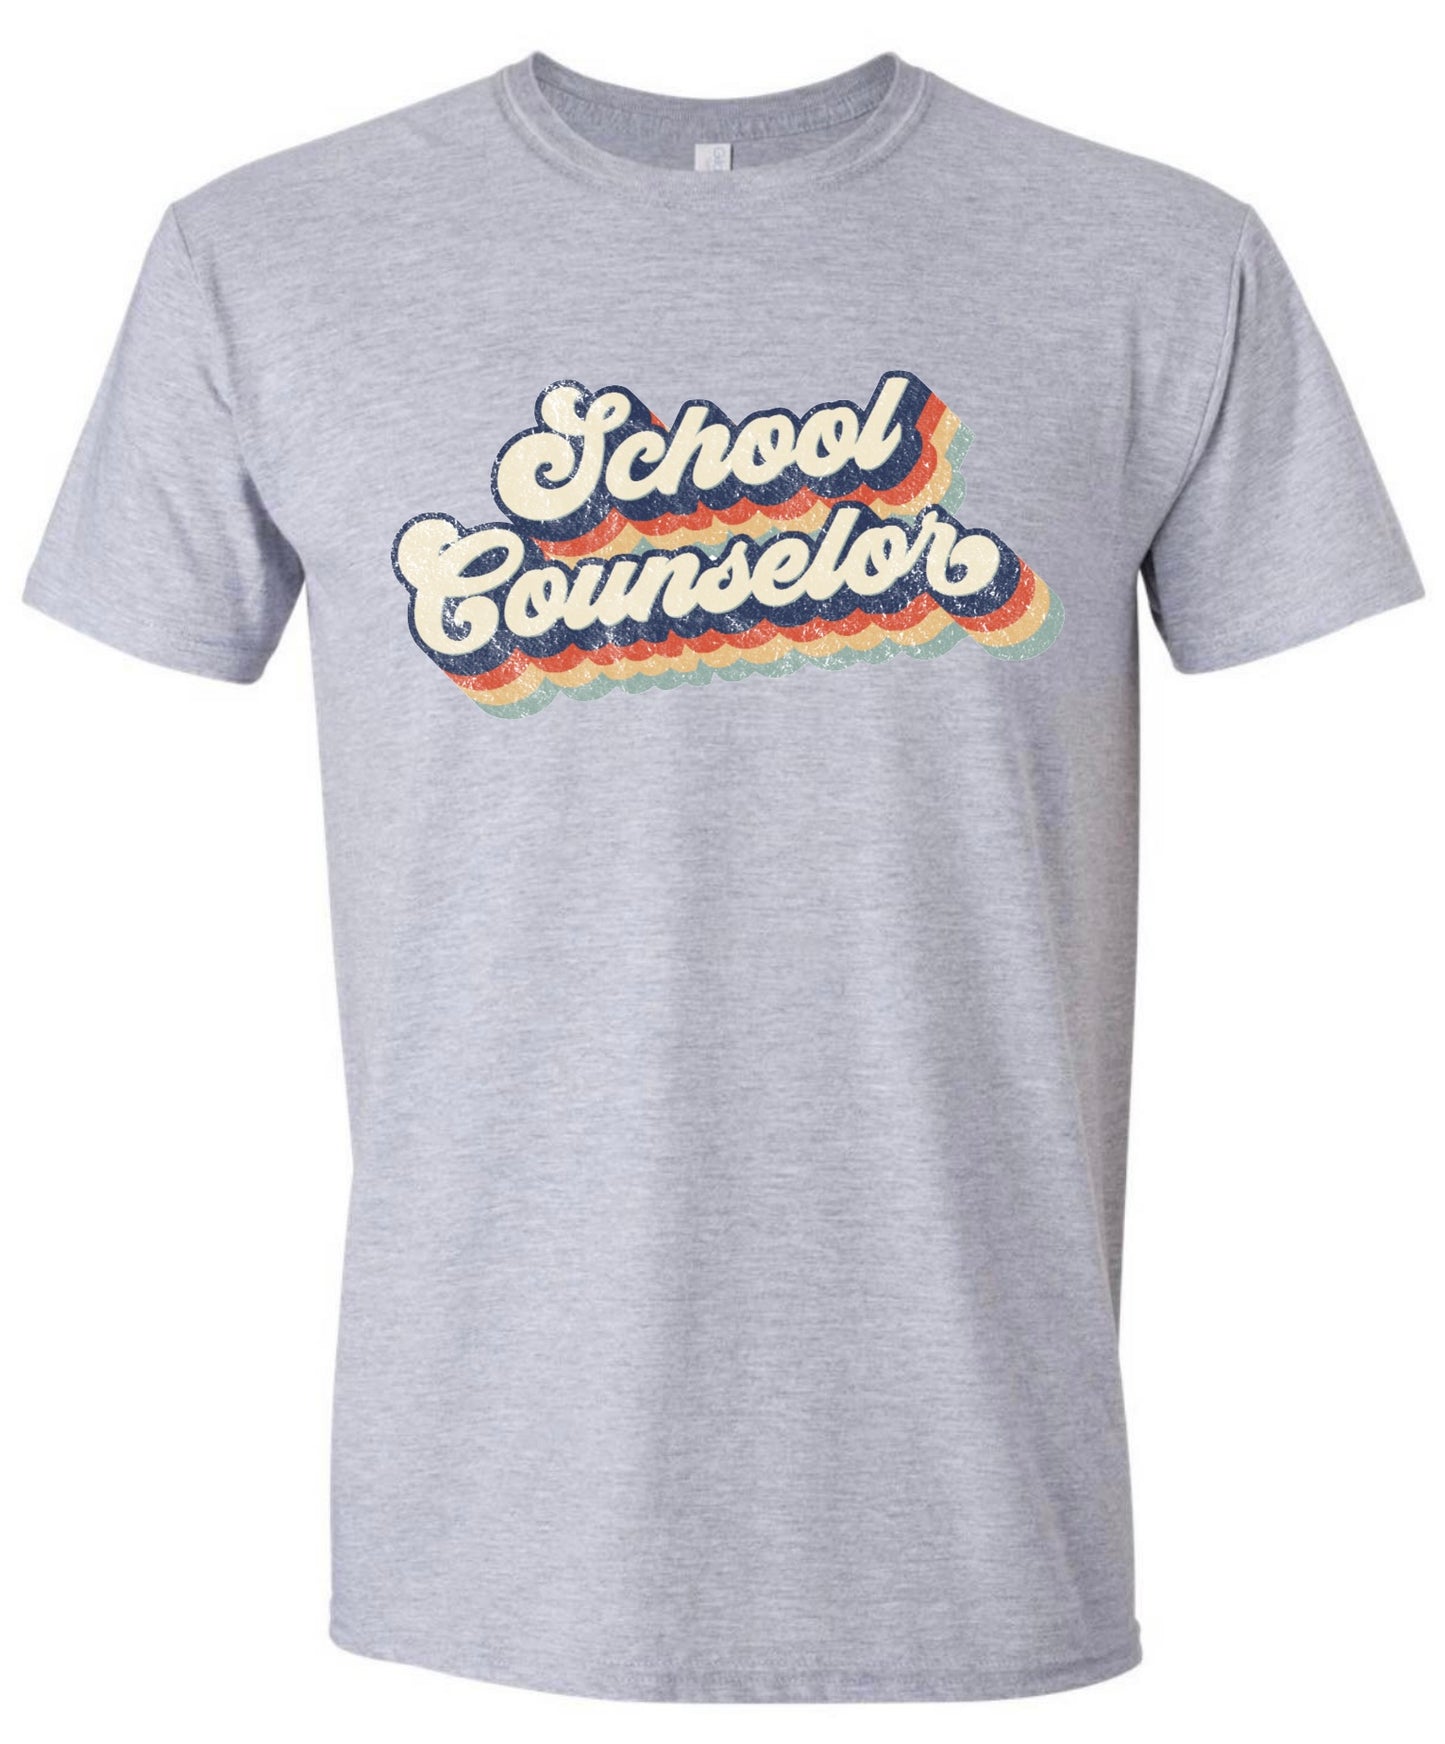 Retro School Counselor Tshirt